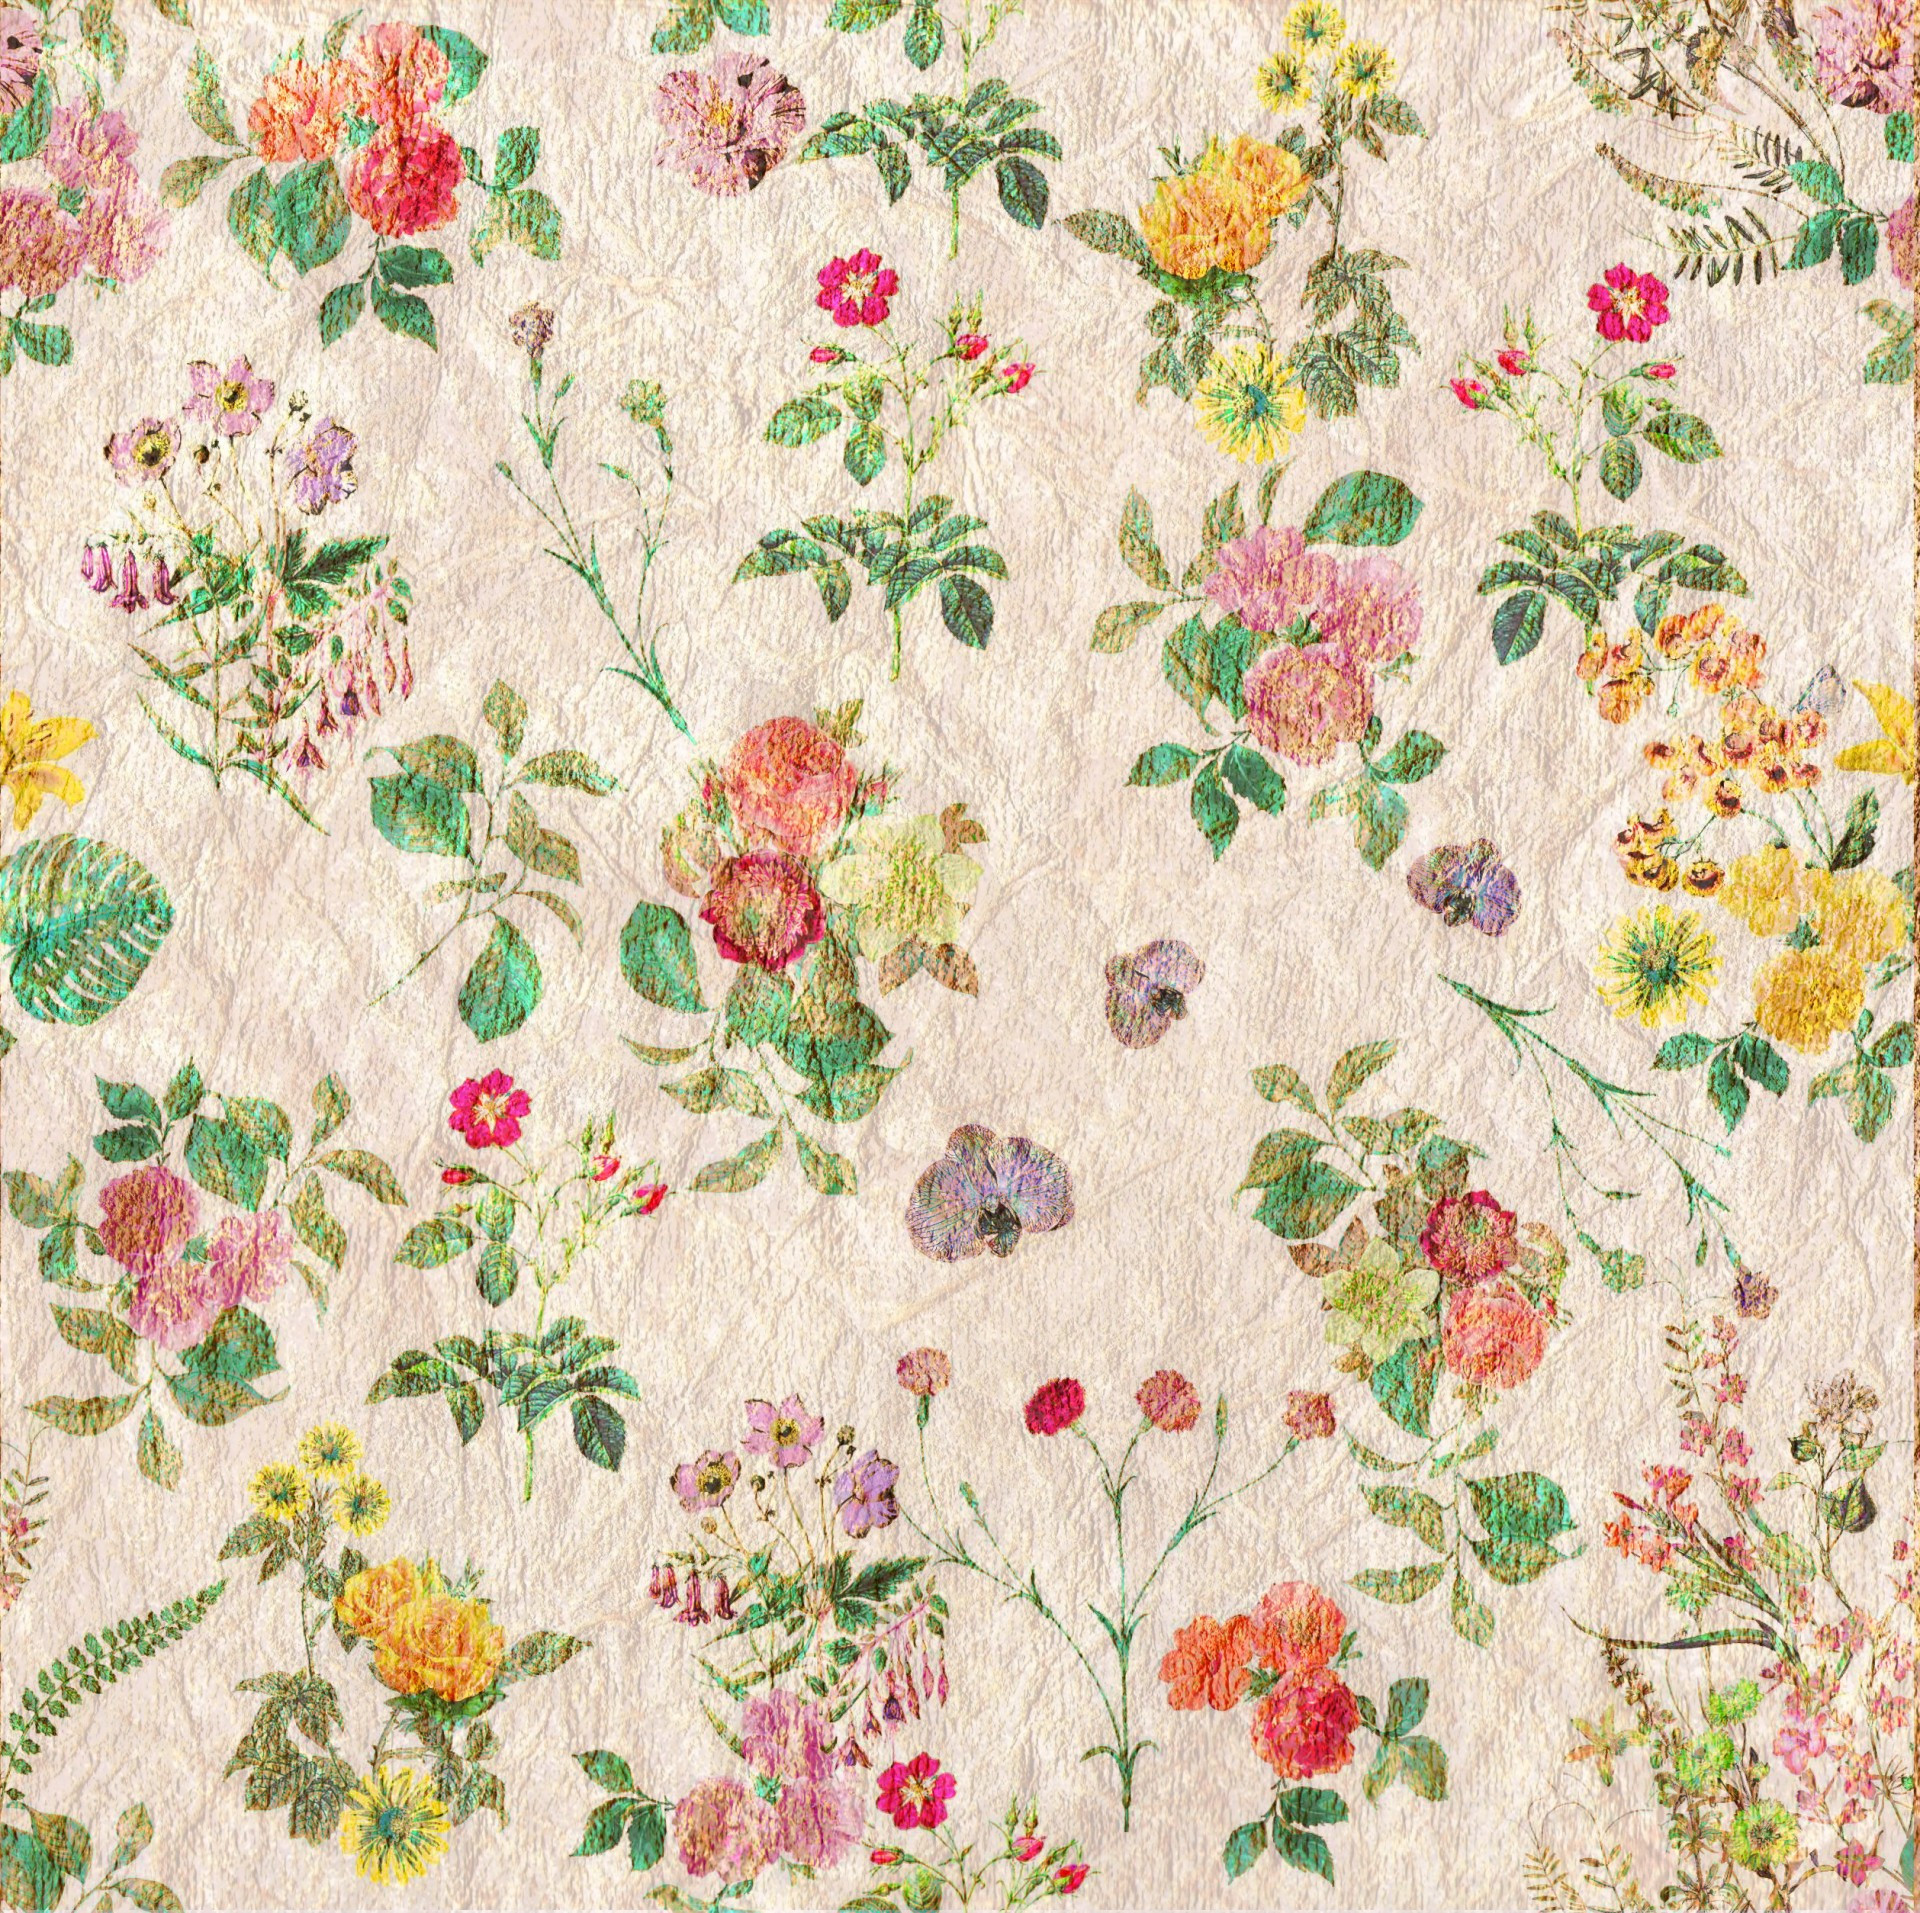 1920x1913 Full Size of Uncategorized:desktop Wallpaper Flowers Vintage Wallpaper  Ebenfalls Elegante Vintage Wallpaper Flowers Vintage ...